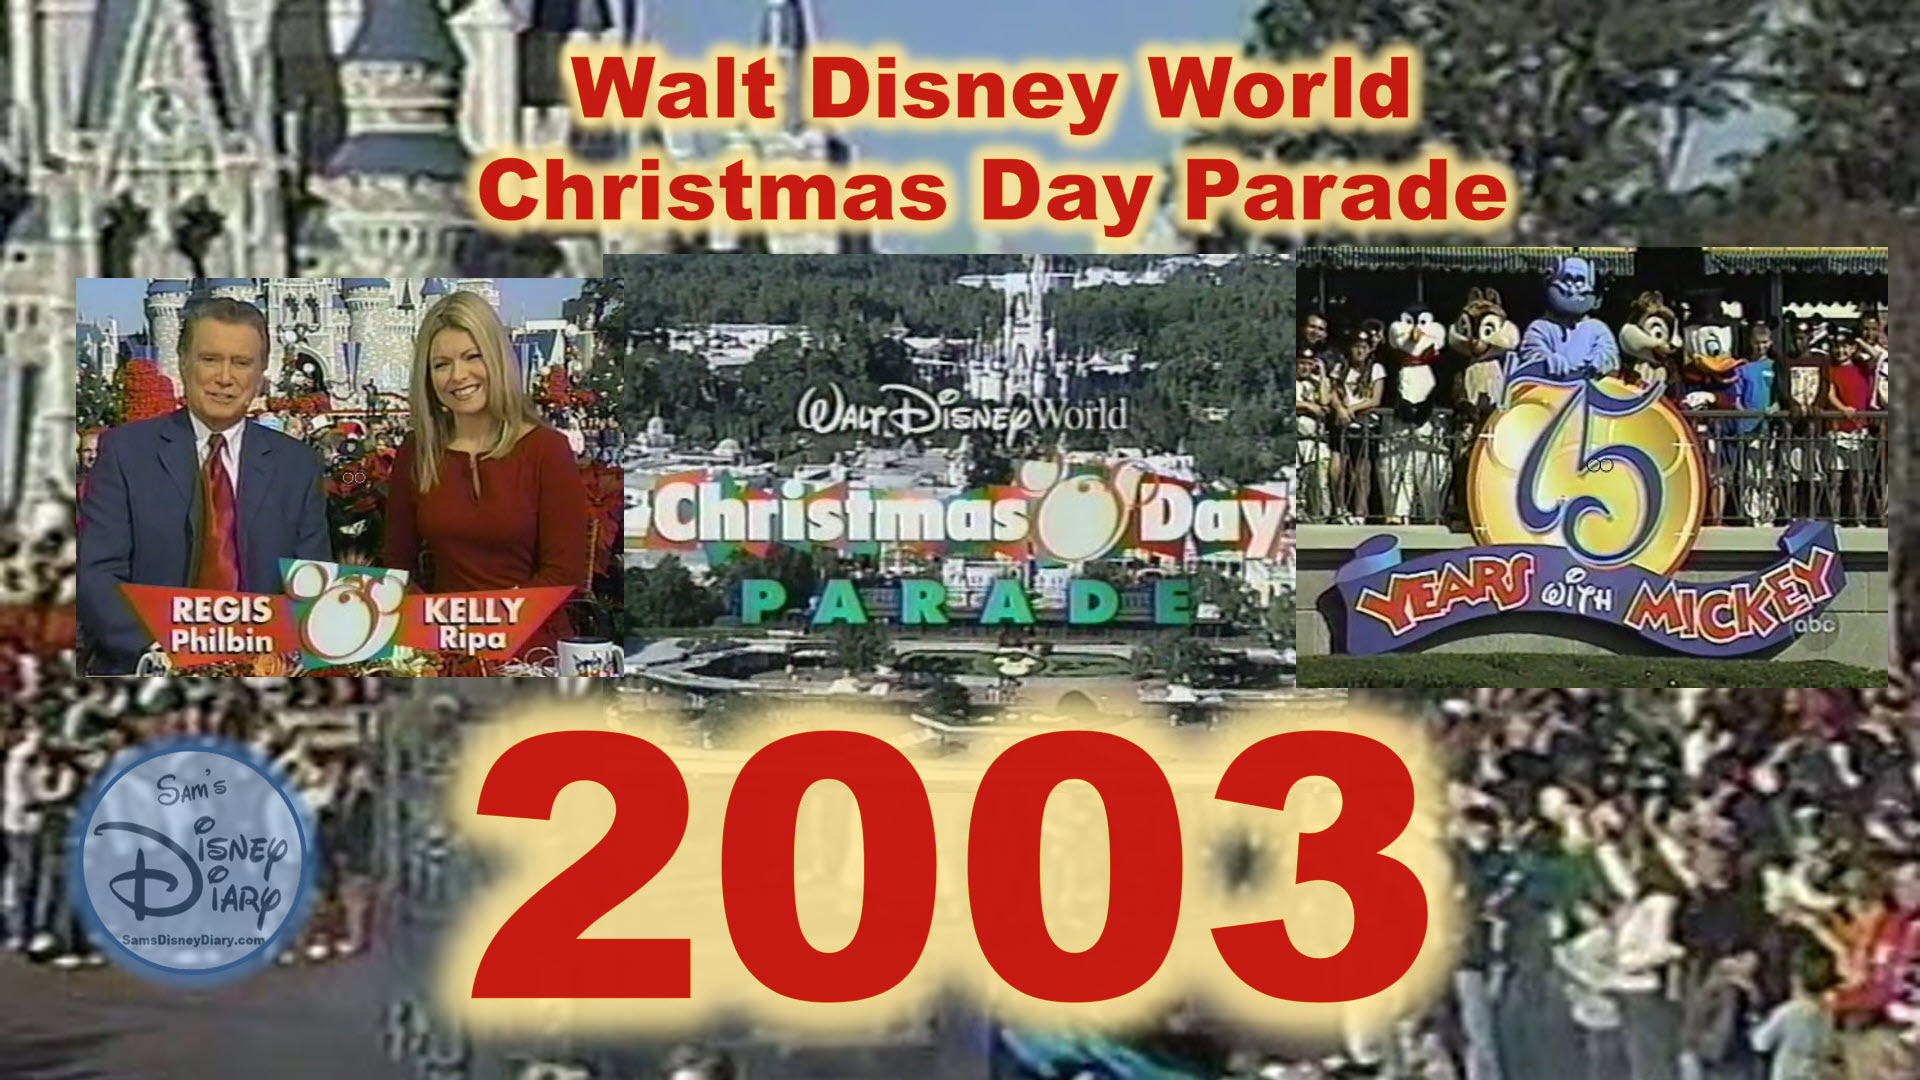 2003 Walt Disney World Christmas Day Parade